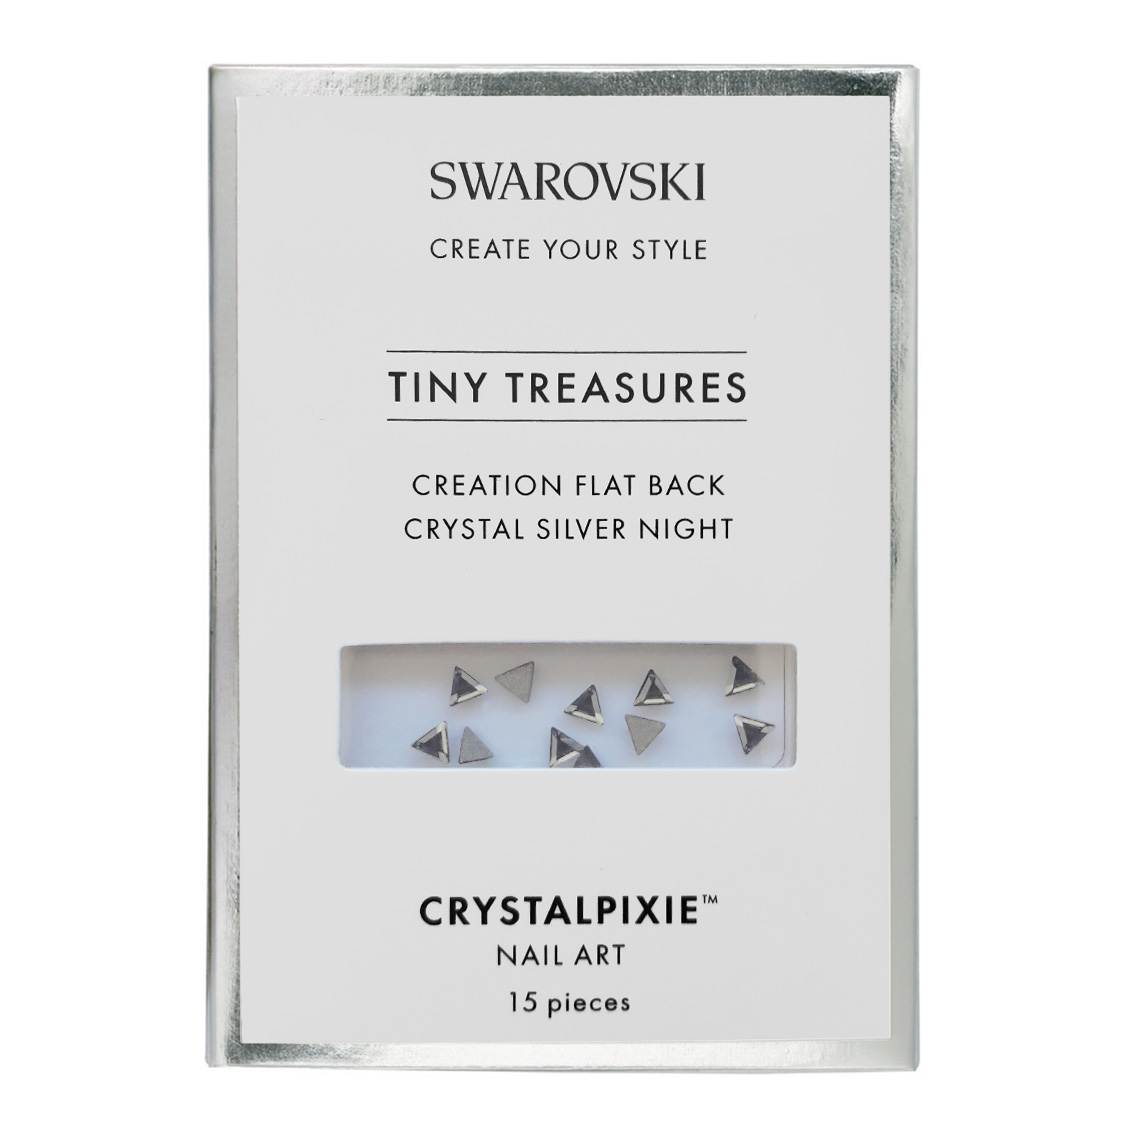 Creation Flat Back - Kristall Silver Night 15 Stück - Swarovski® Tiny Treasures